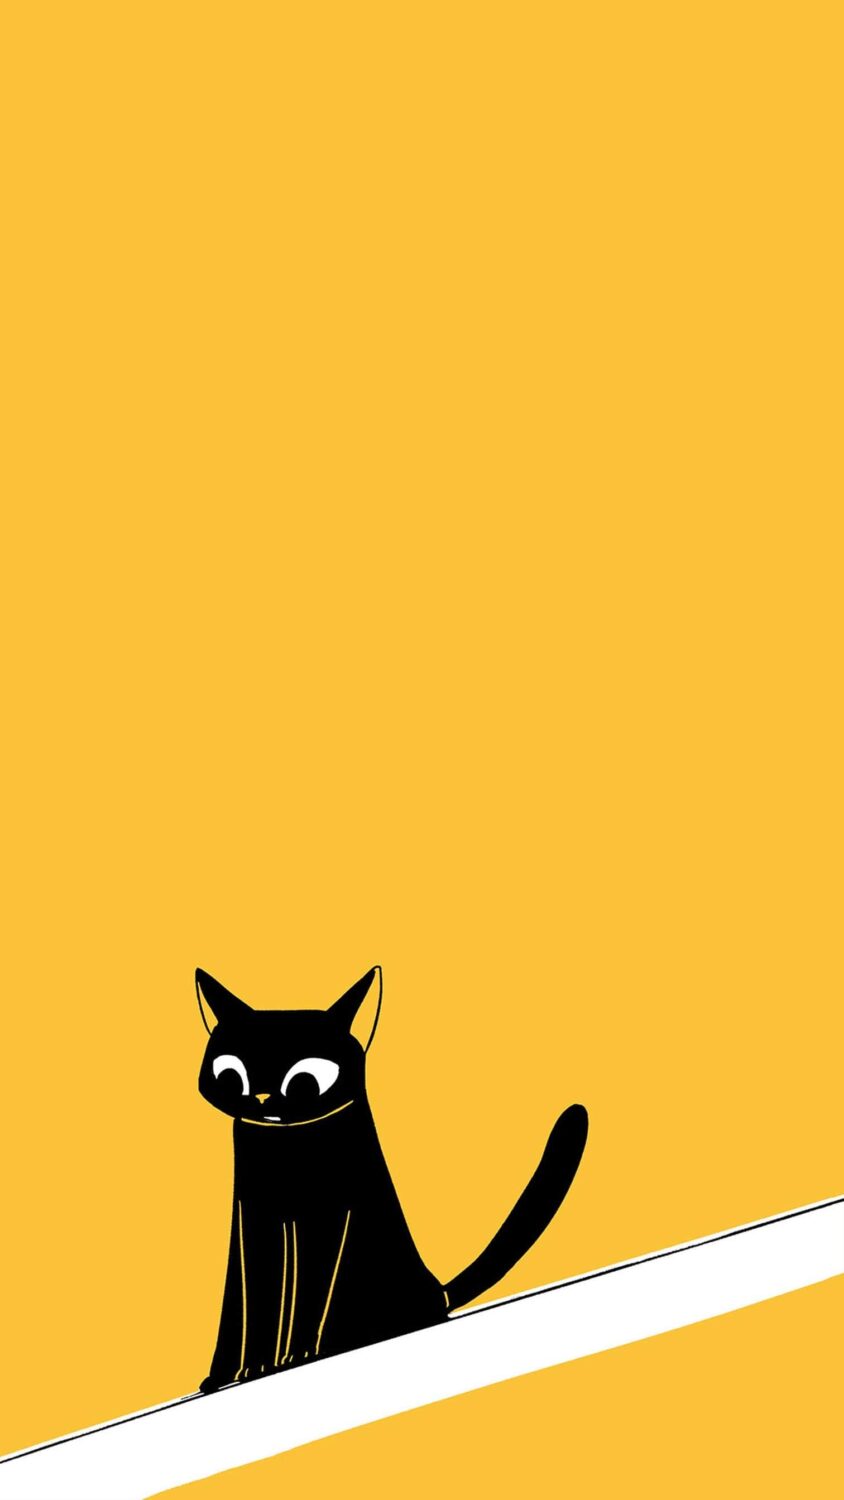 Playful black cat